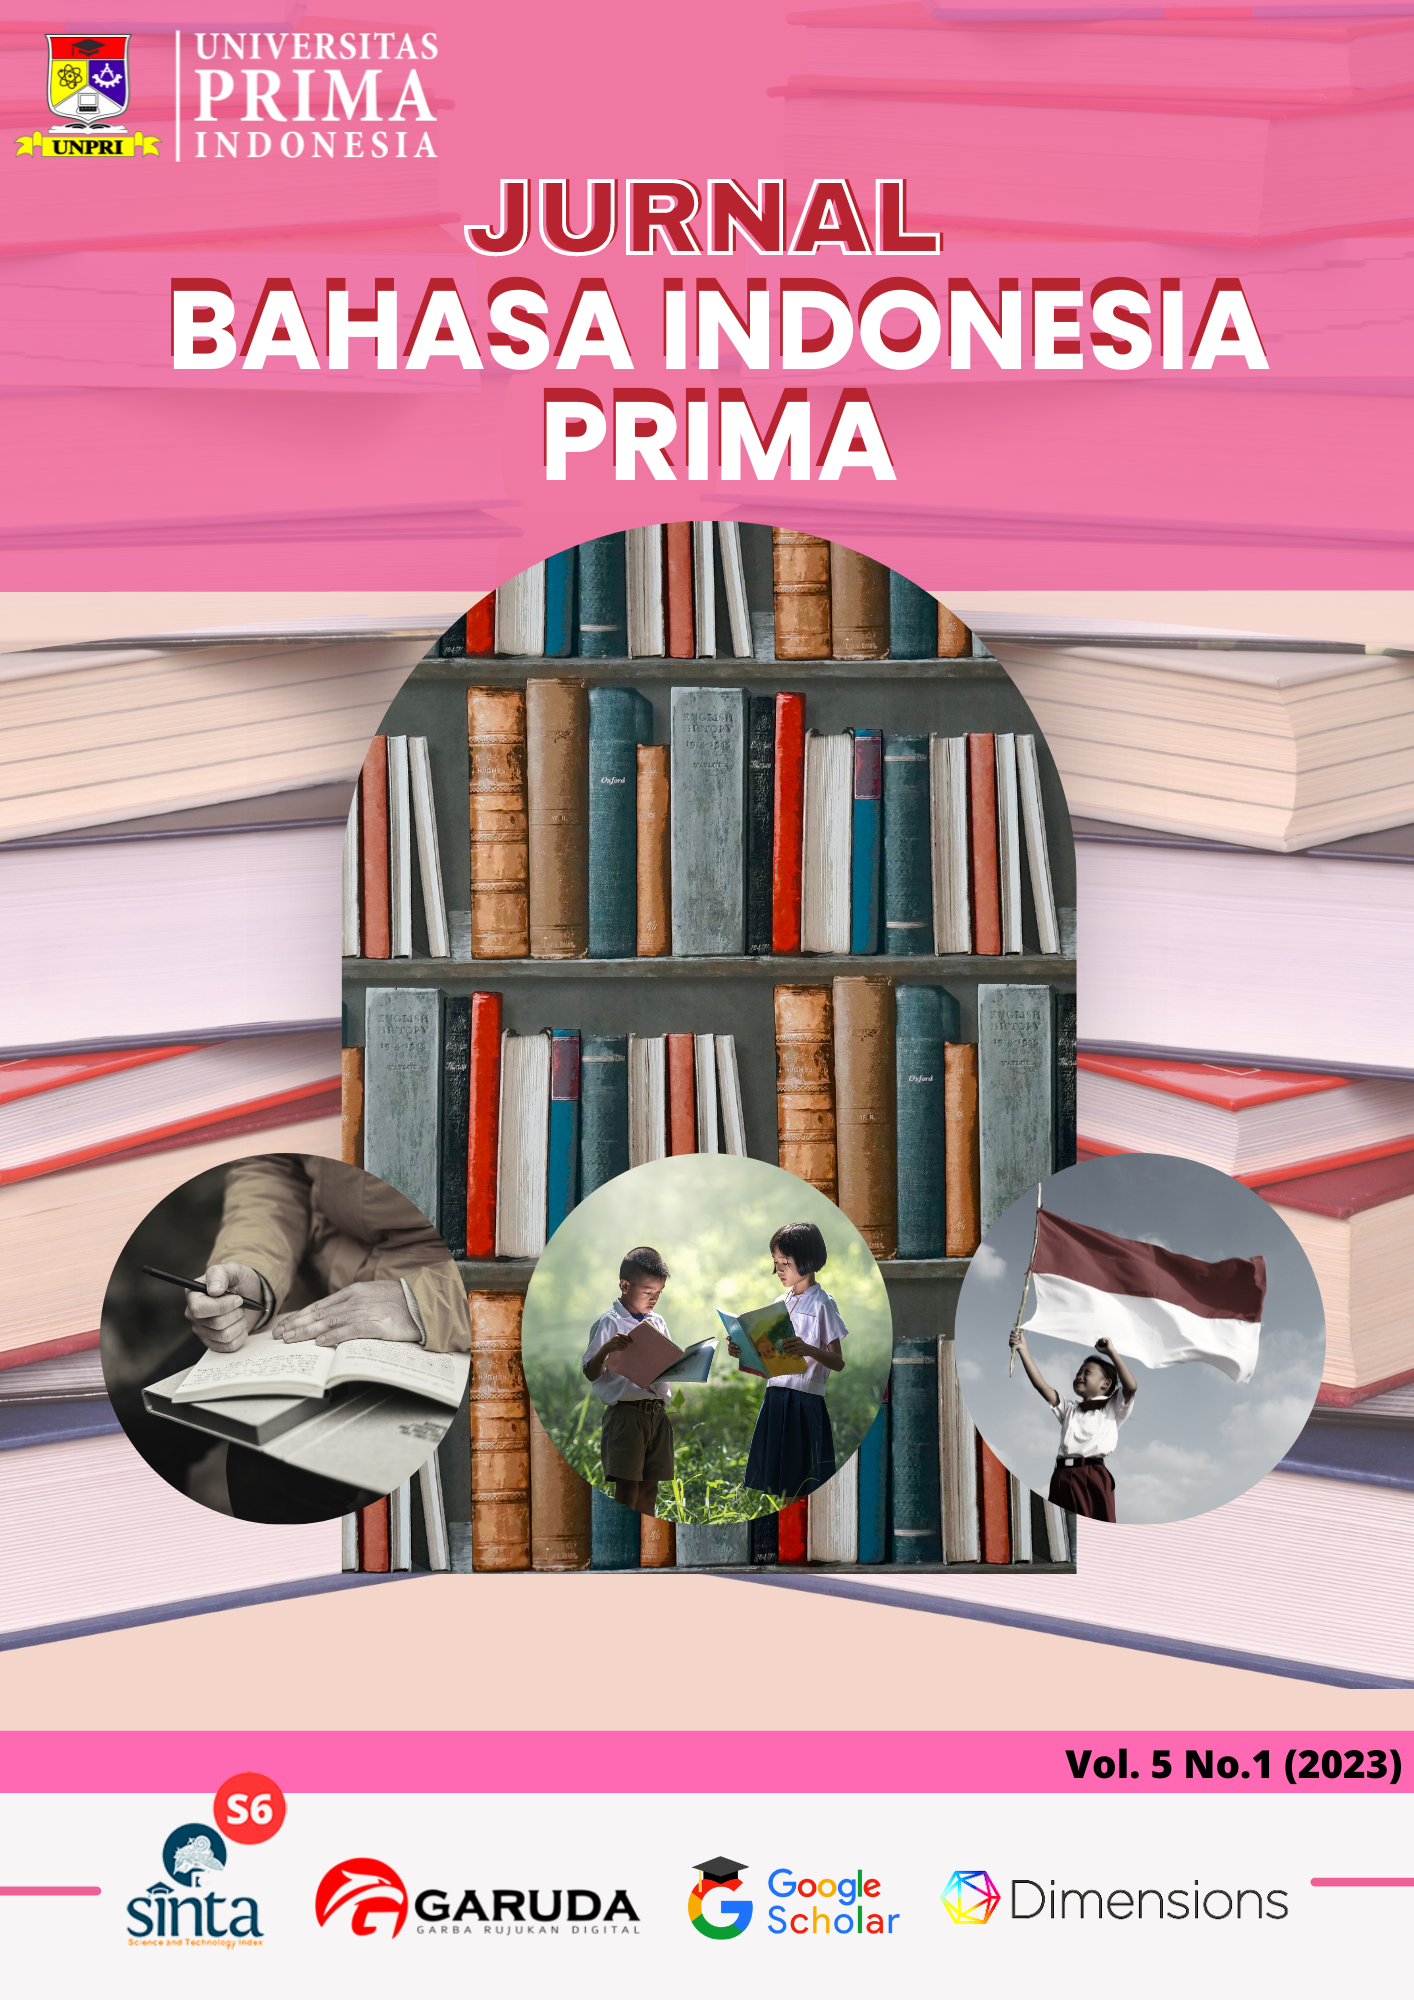 					View Vol. 5 No. 1 (2023): Bahasa Indonesia Prima (BIP)
				